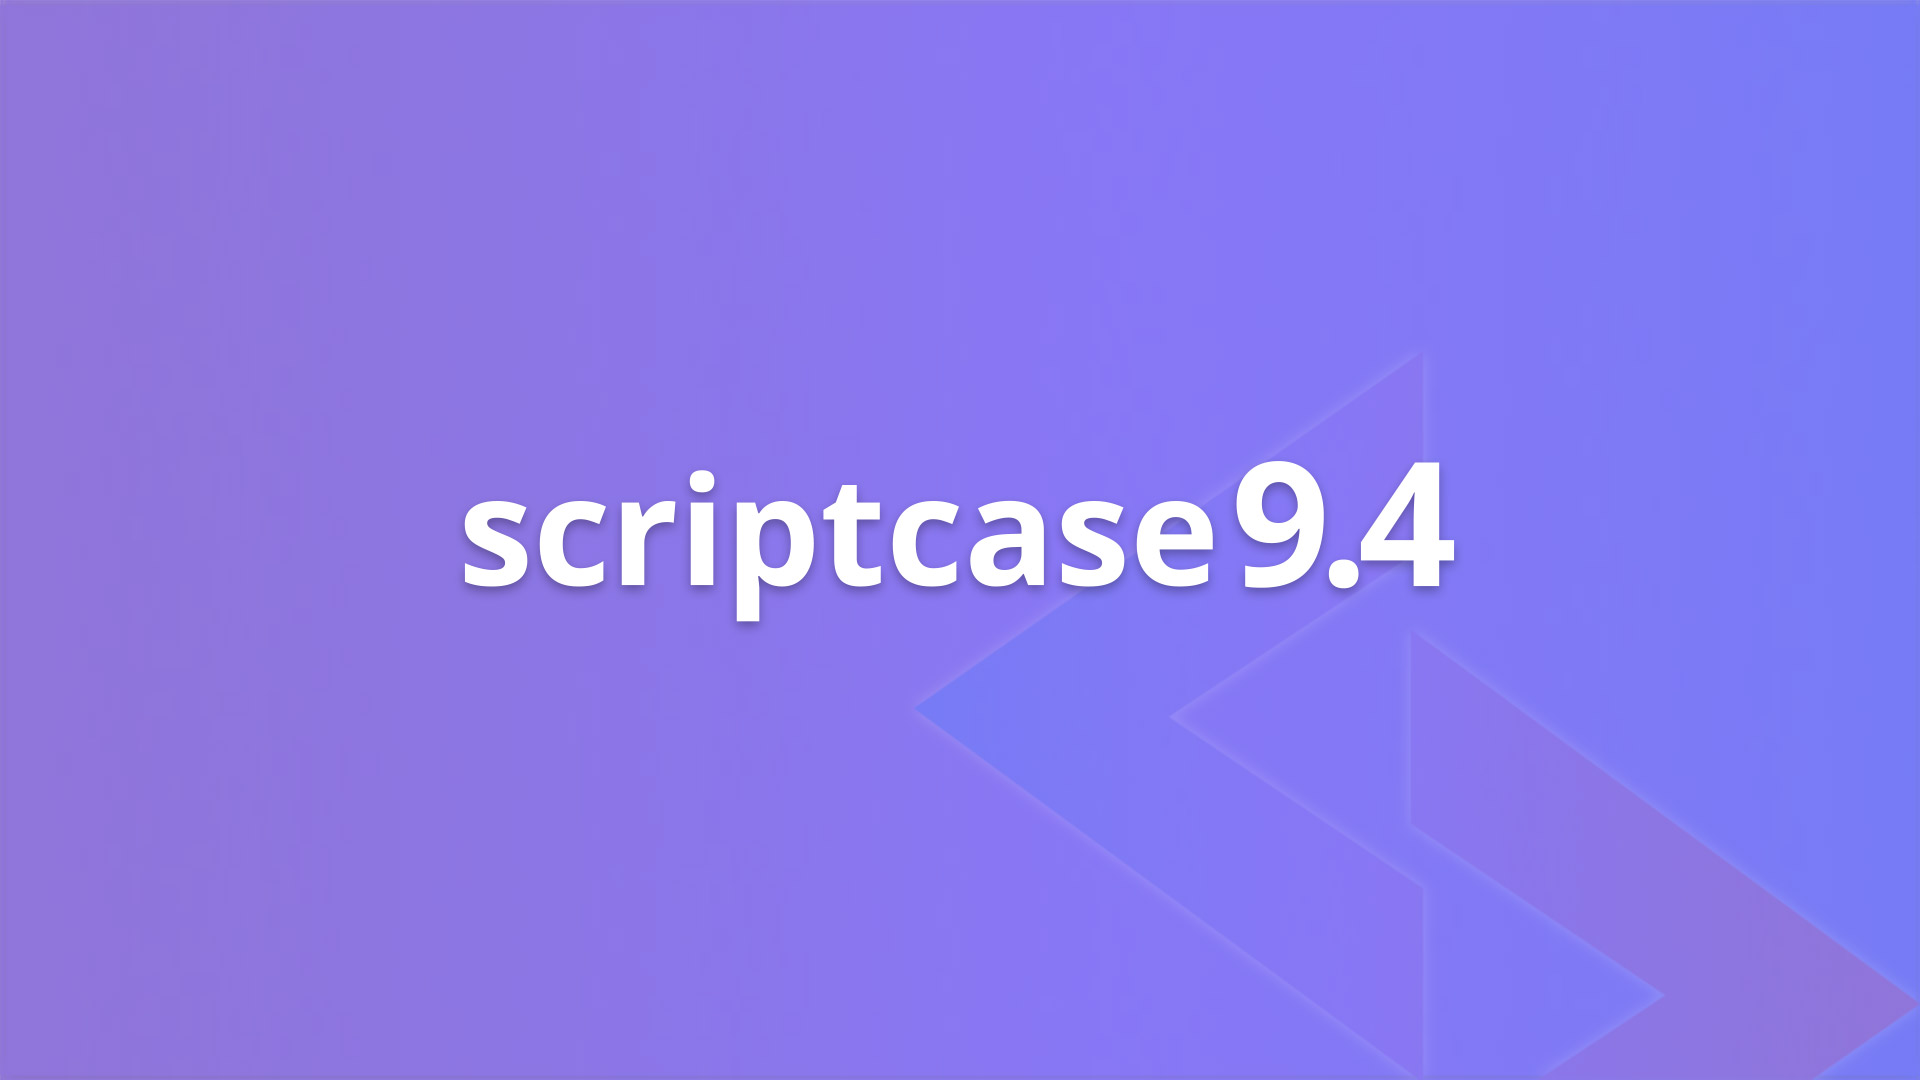 scriptcase 9.4 full mega